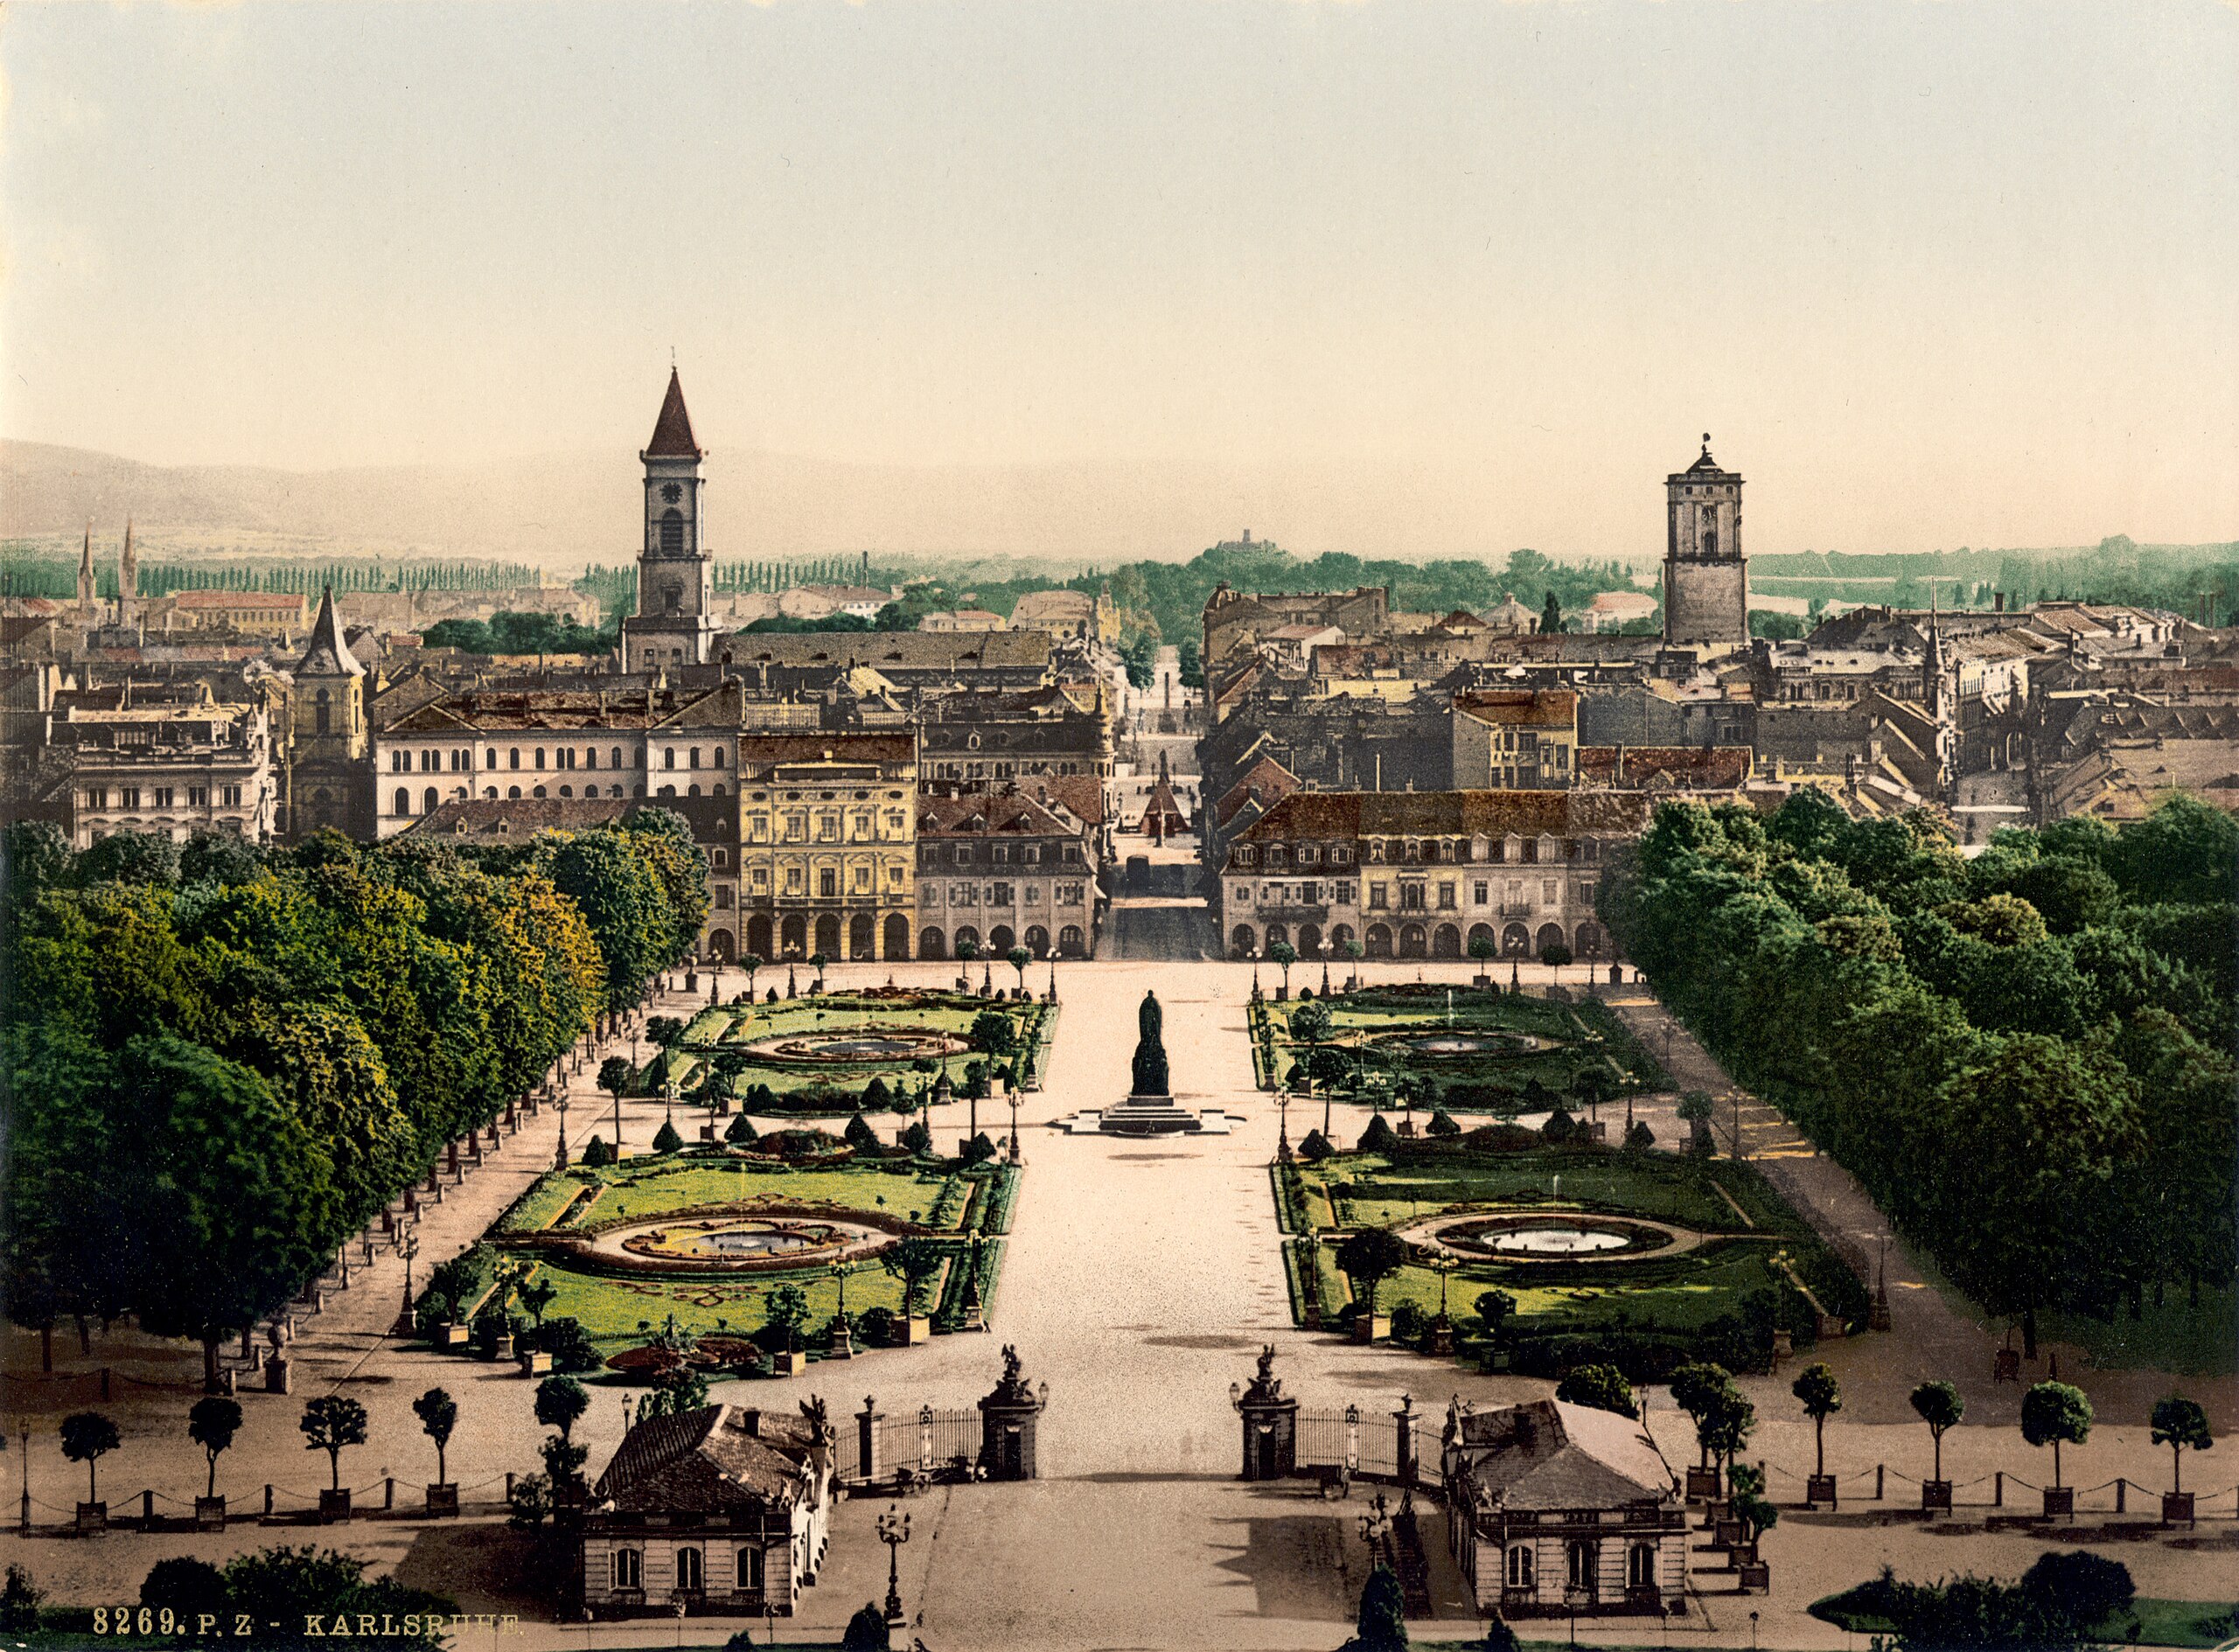 Karlsruhe vers 1900, depuis la tour du château. (C) Wikipedia